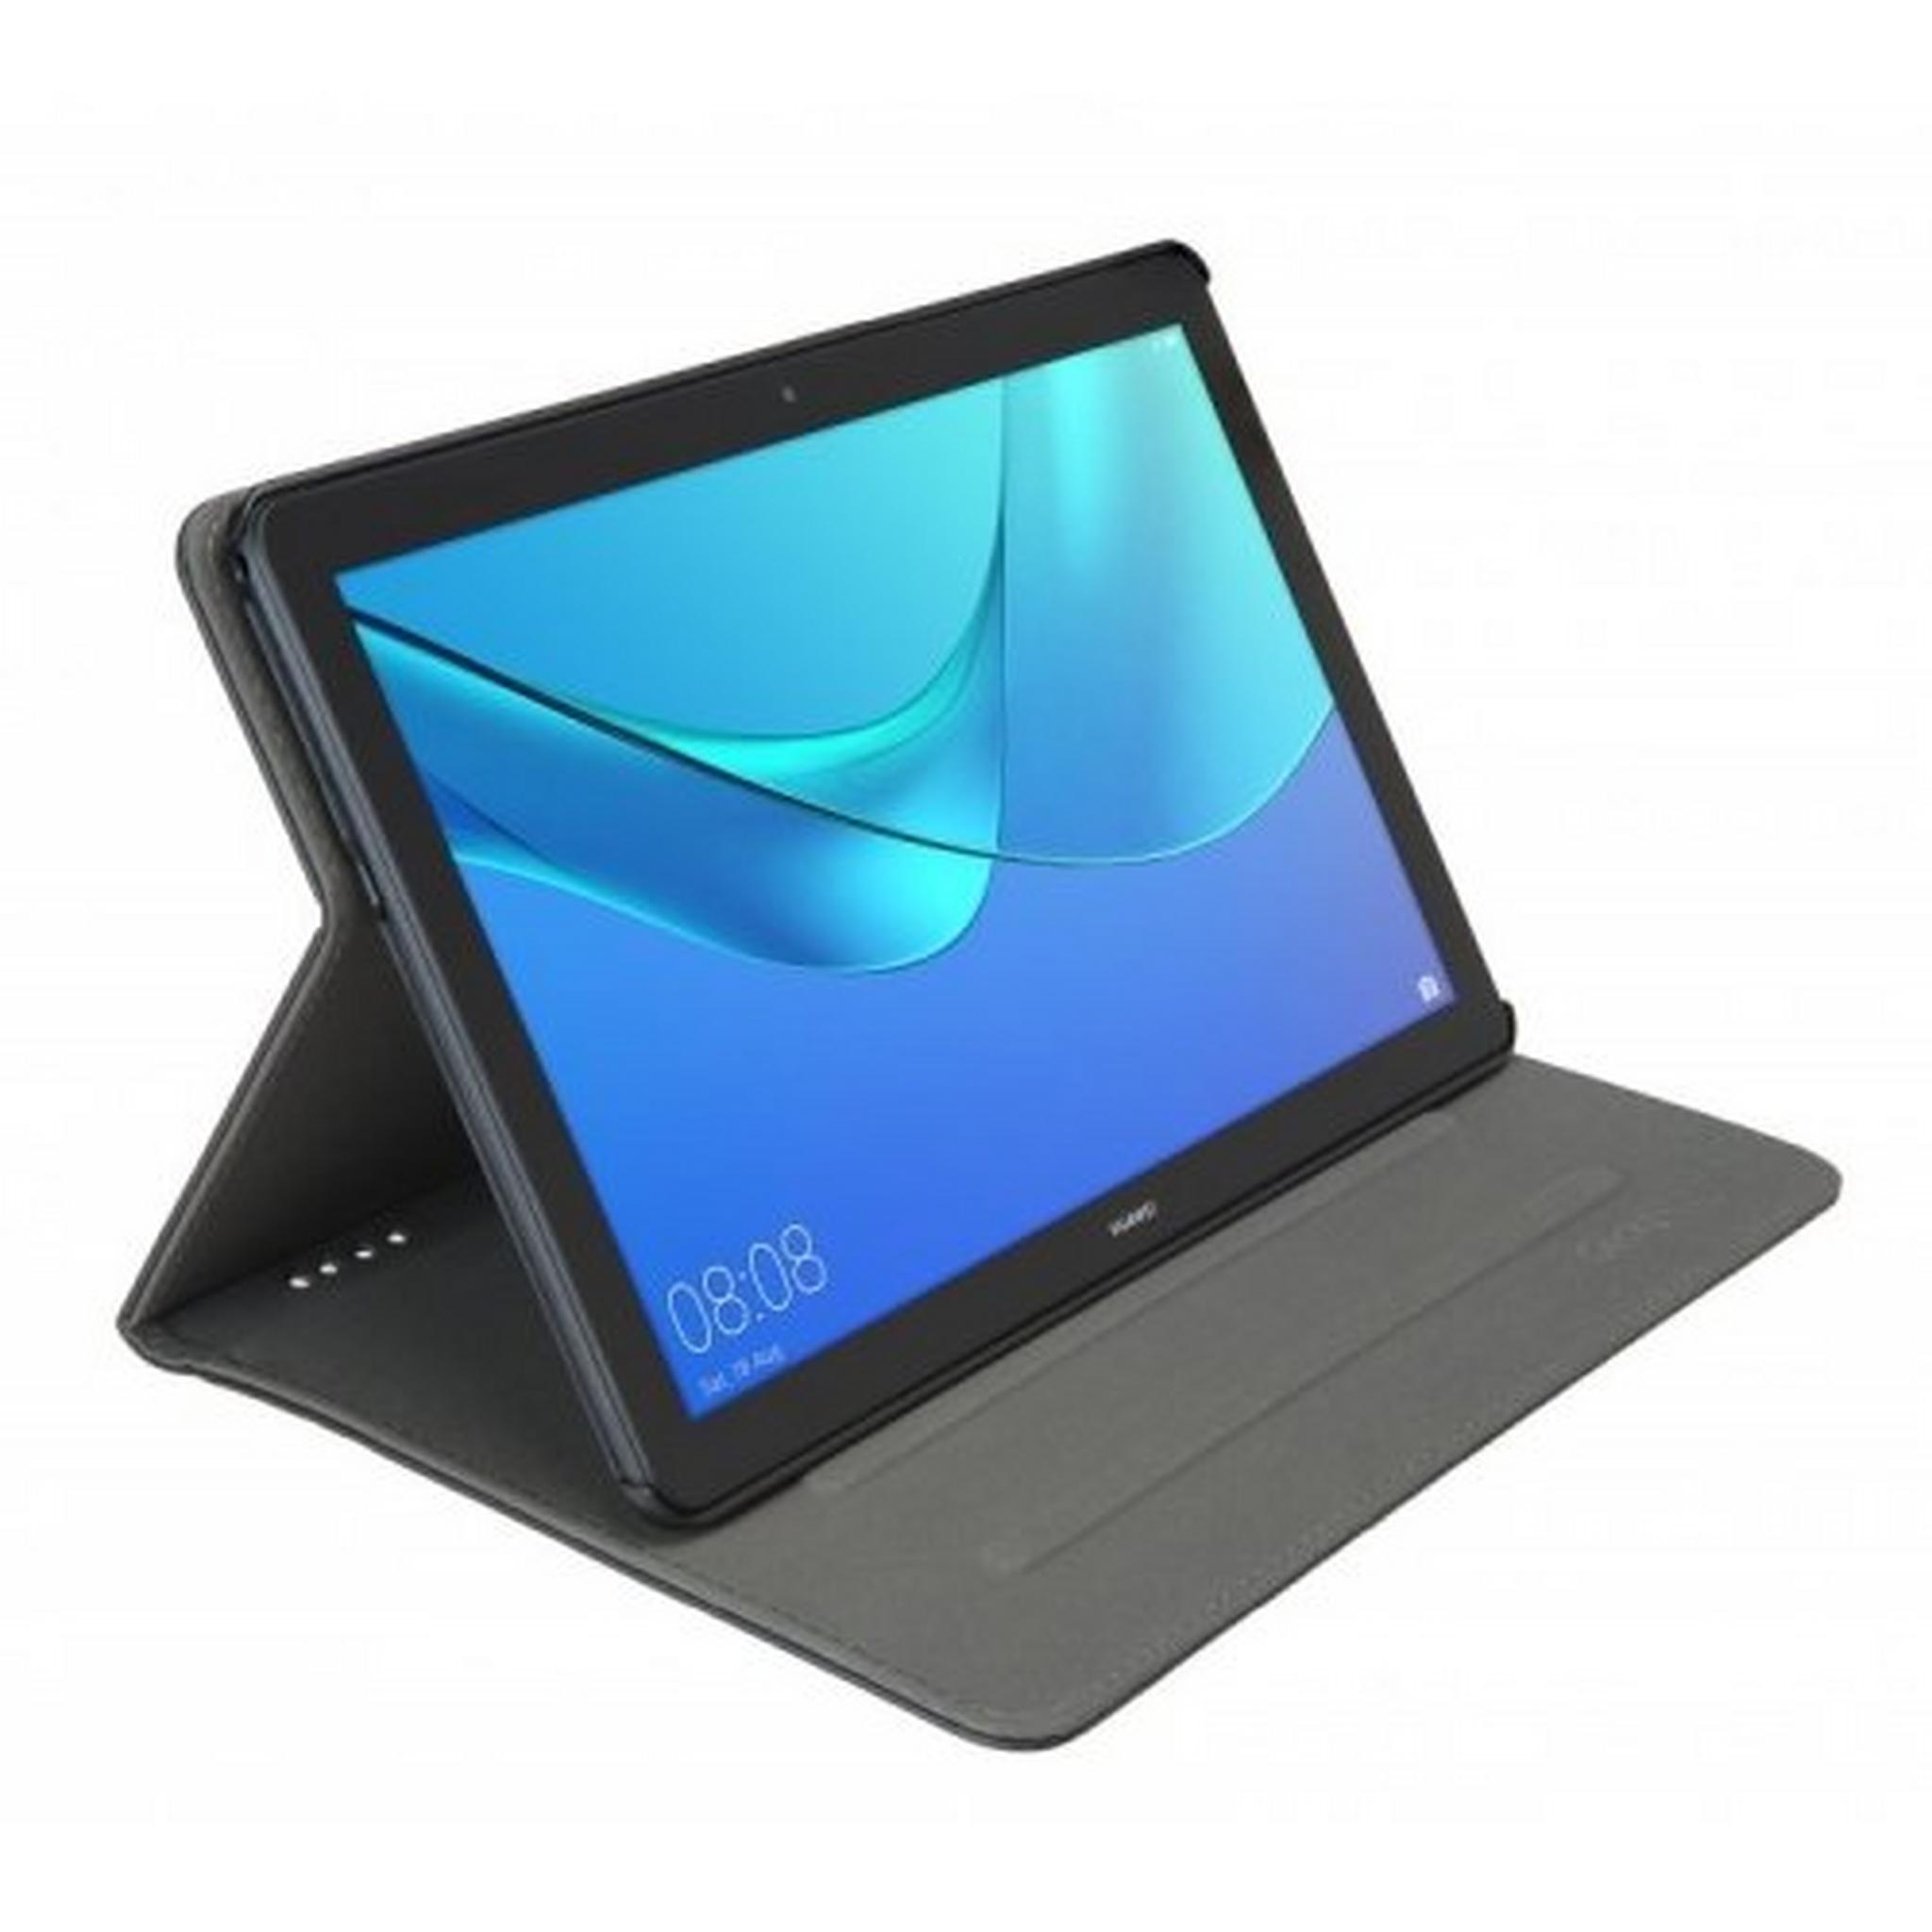 Gecko Huawei MediPad T3 Easy Click Cover - Black